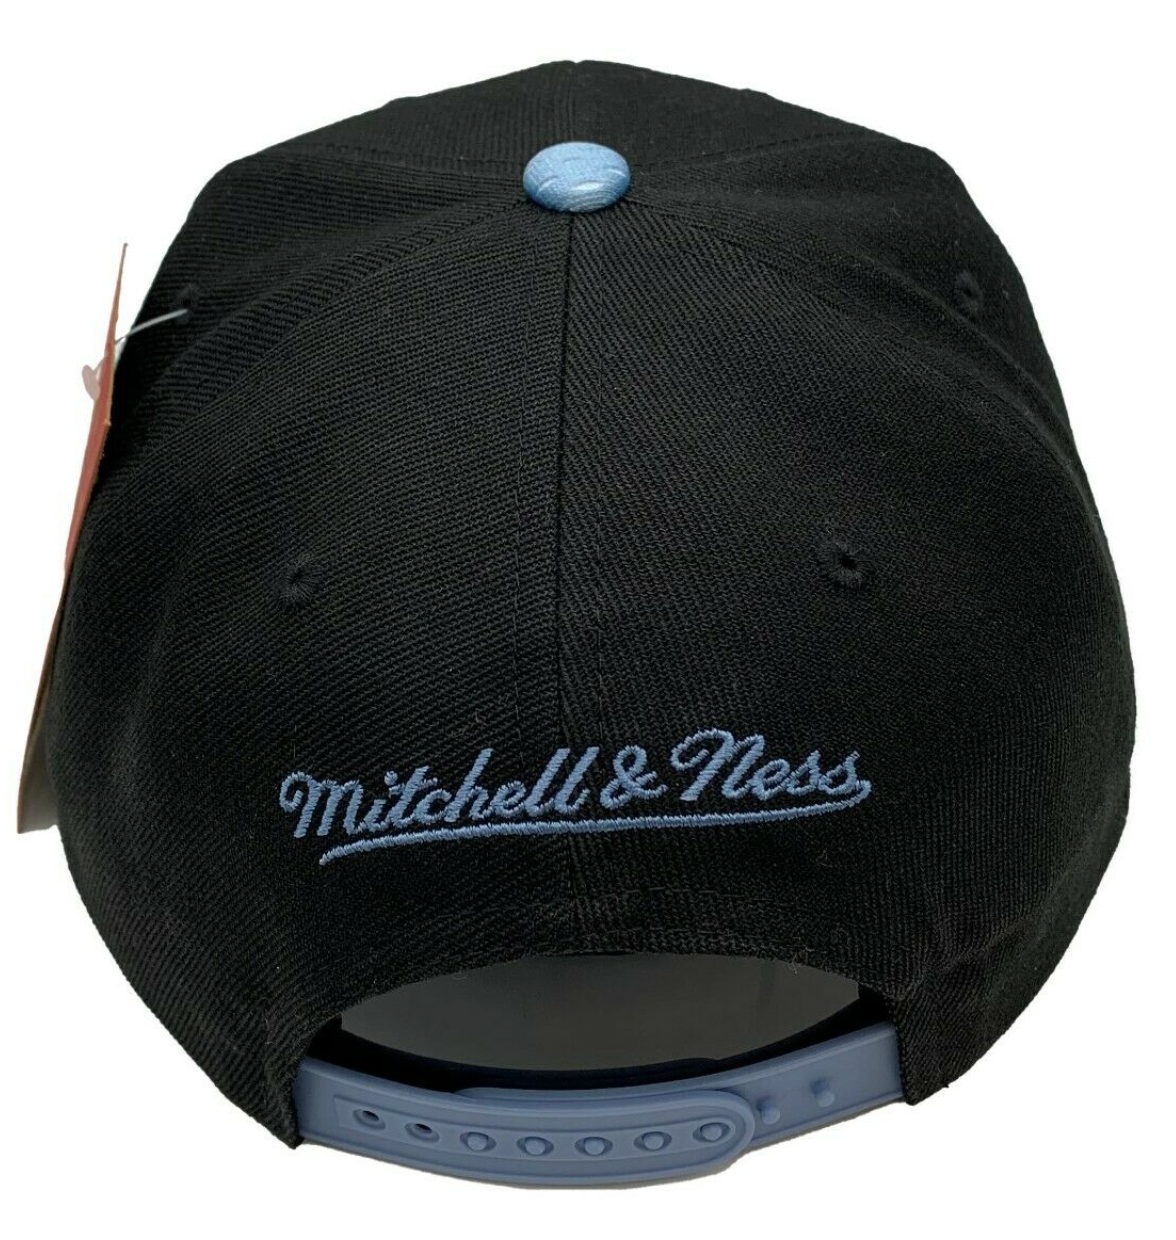 Men's Mitchell & Ness Black/Blue Memphis Grizzlies Hardwood Classics Snapshot Adjustable Snapback Hat